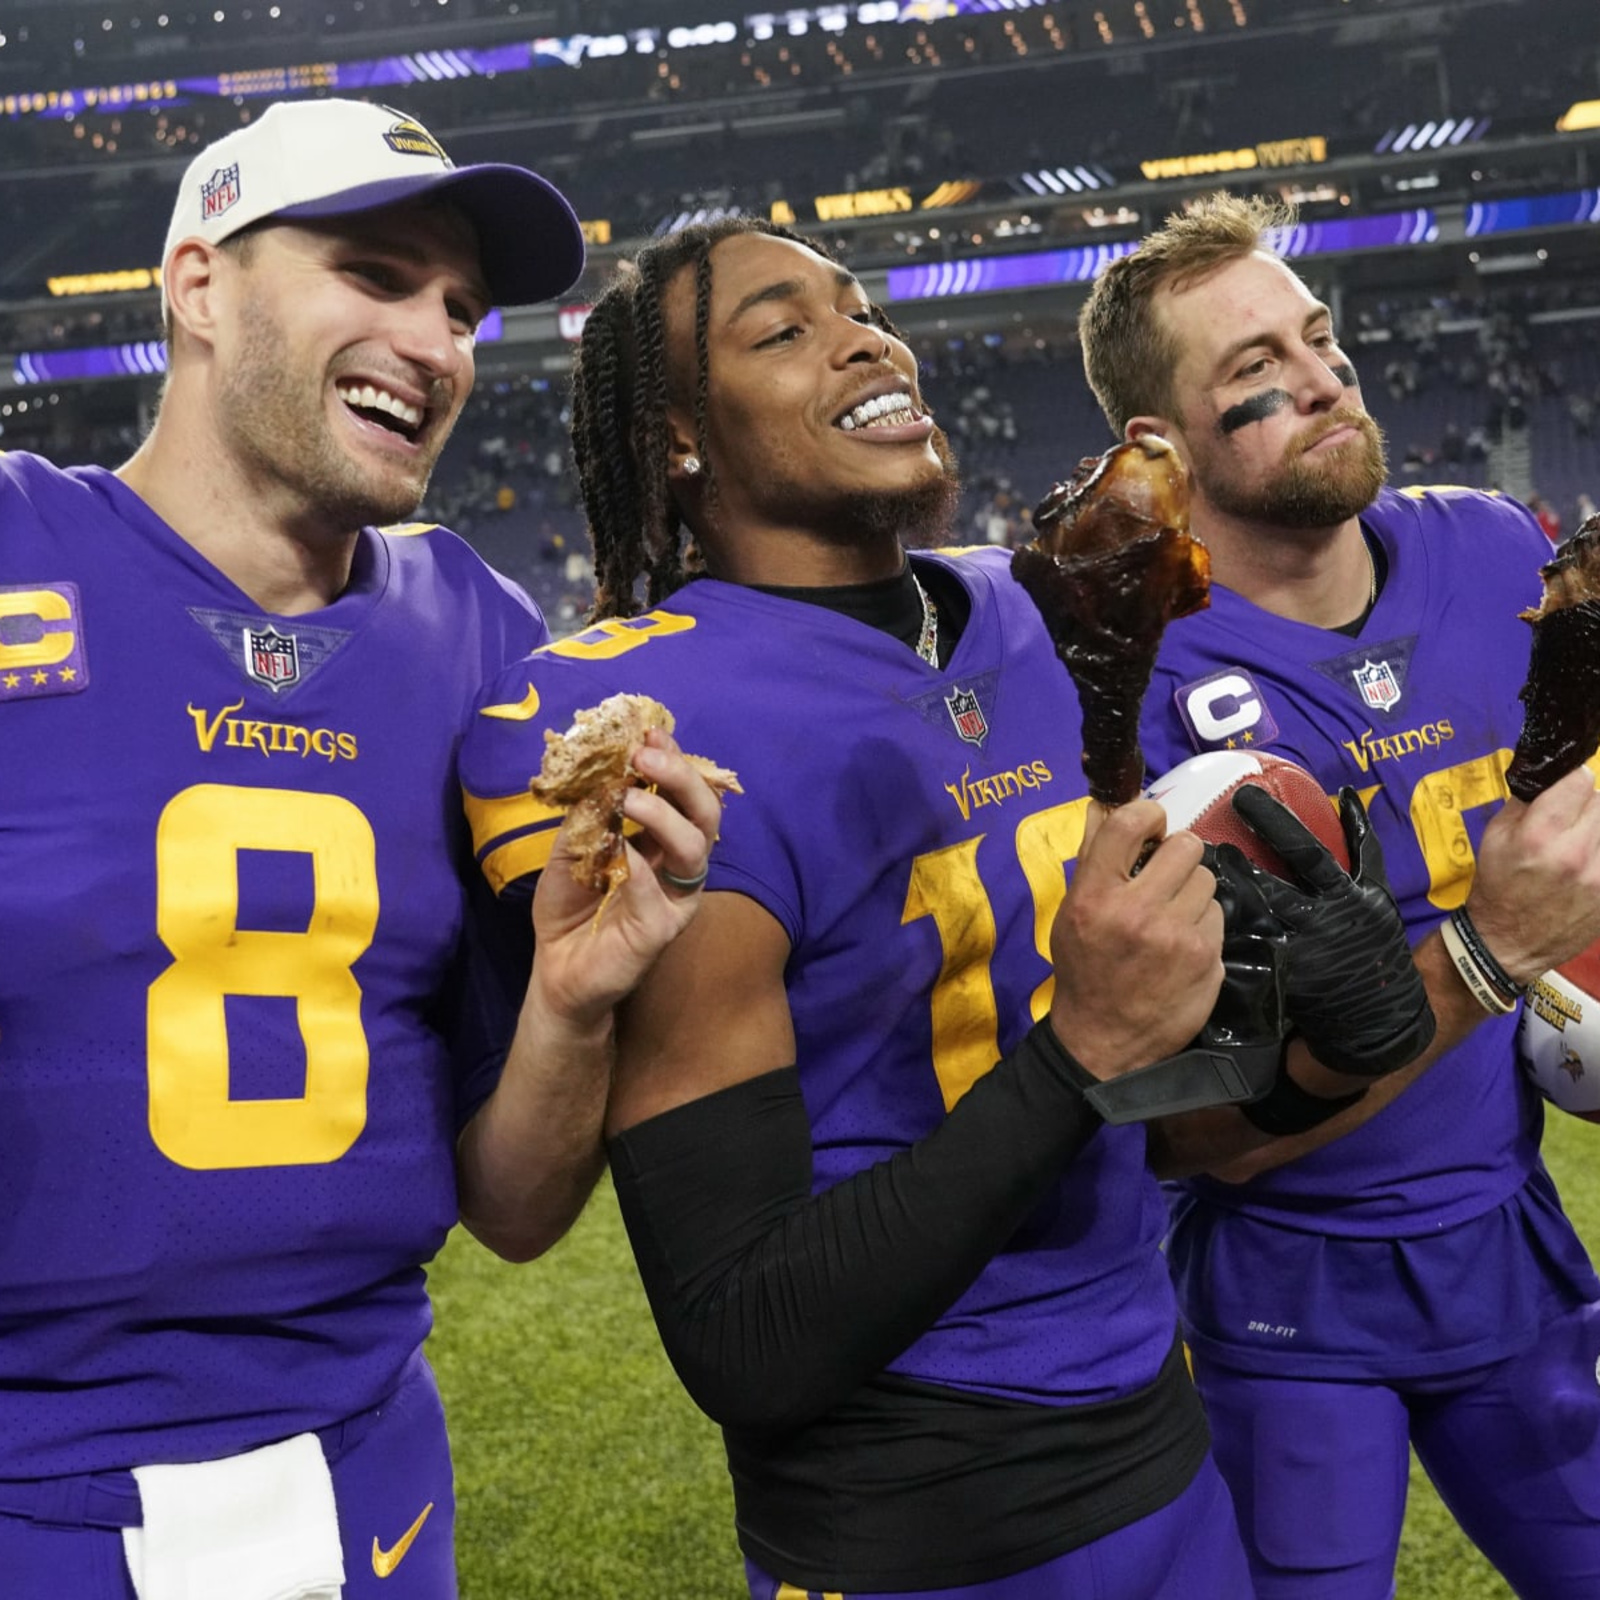 Minnesota Vikings complete largest comeback in NFL history